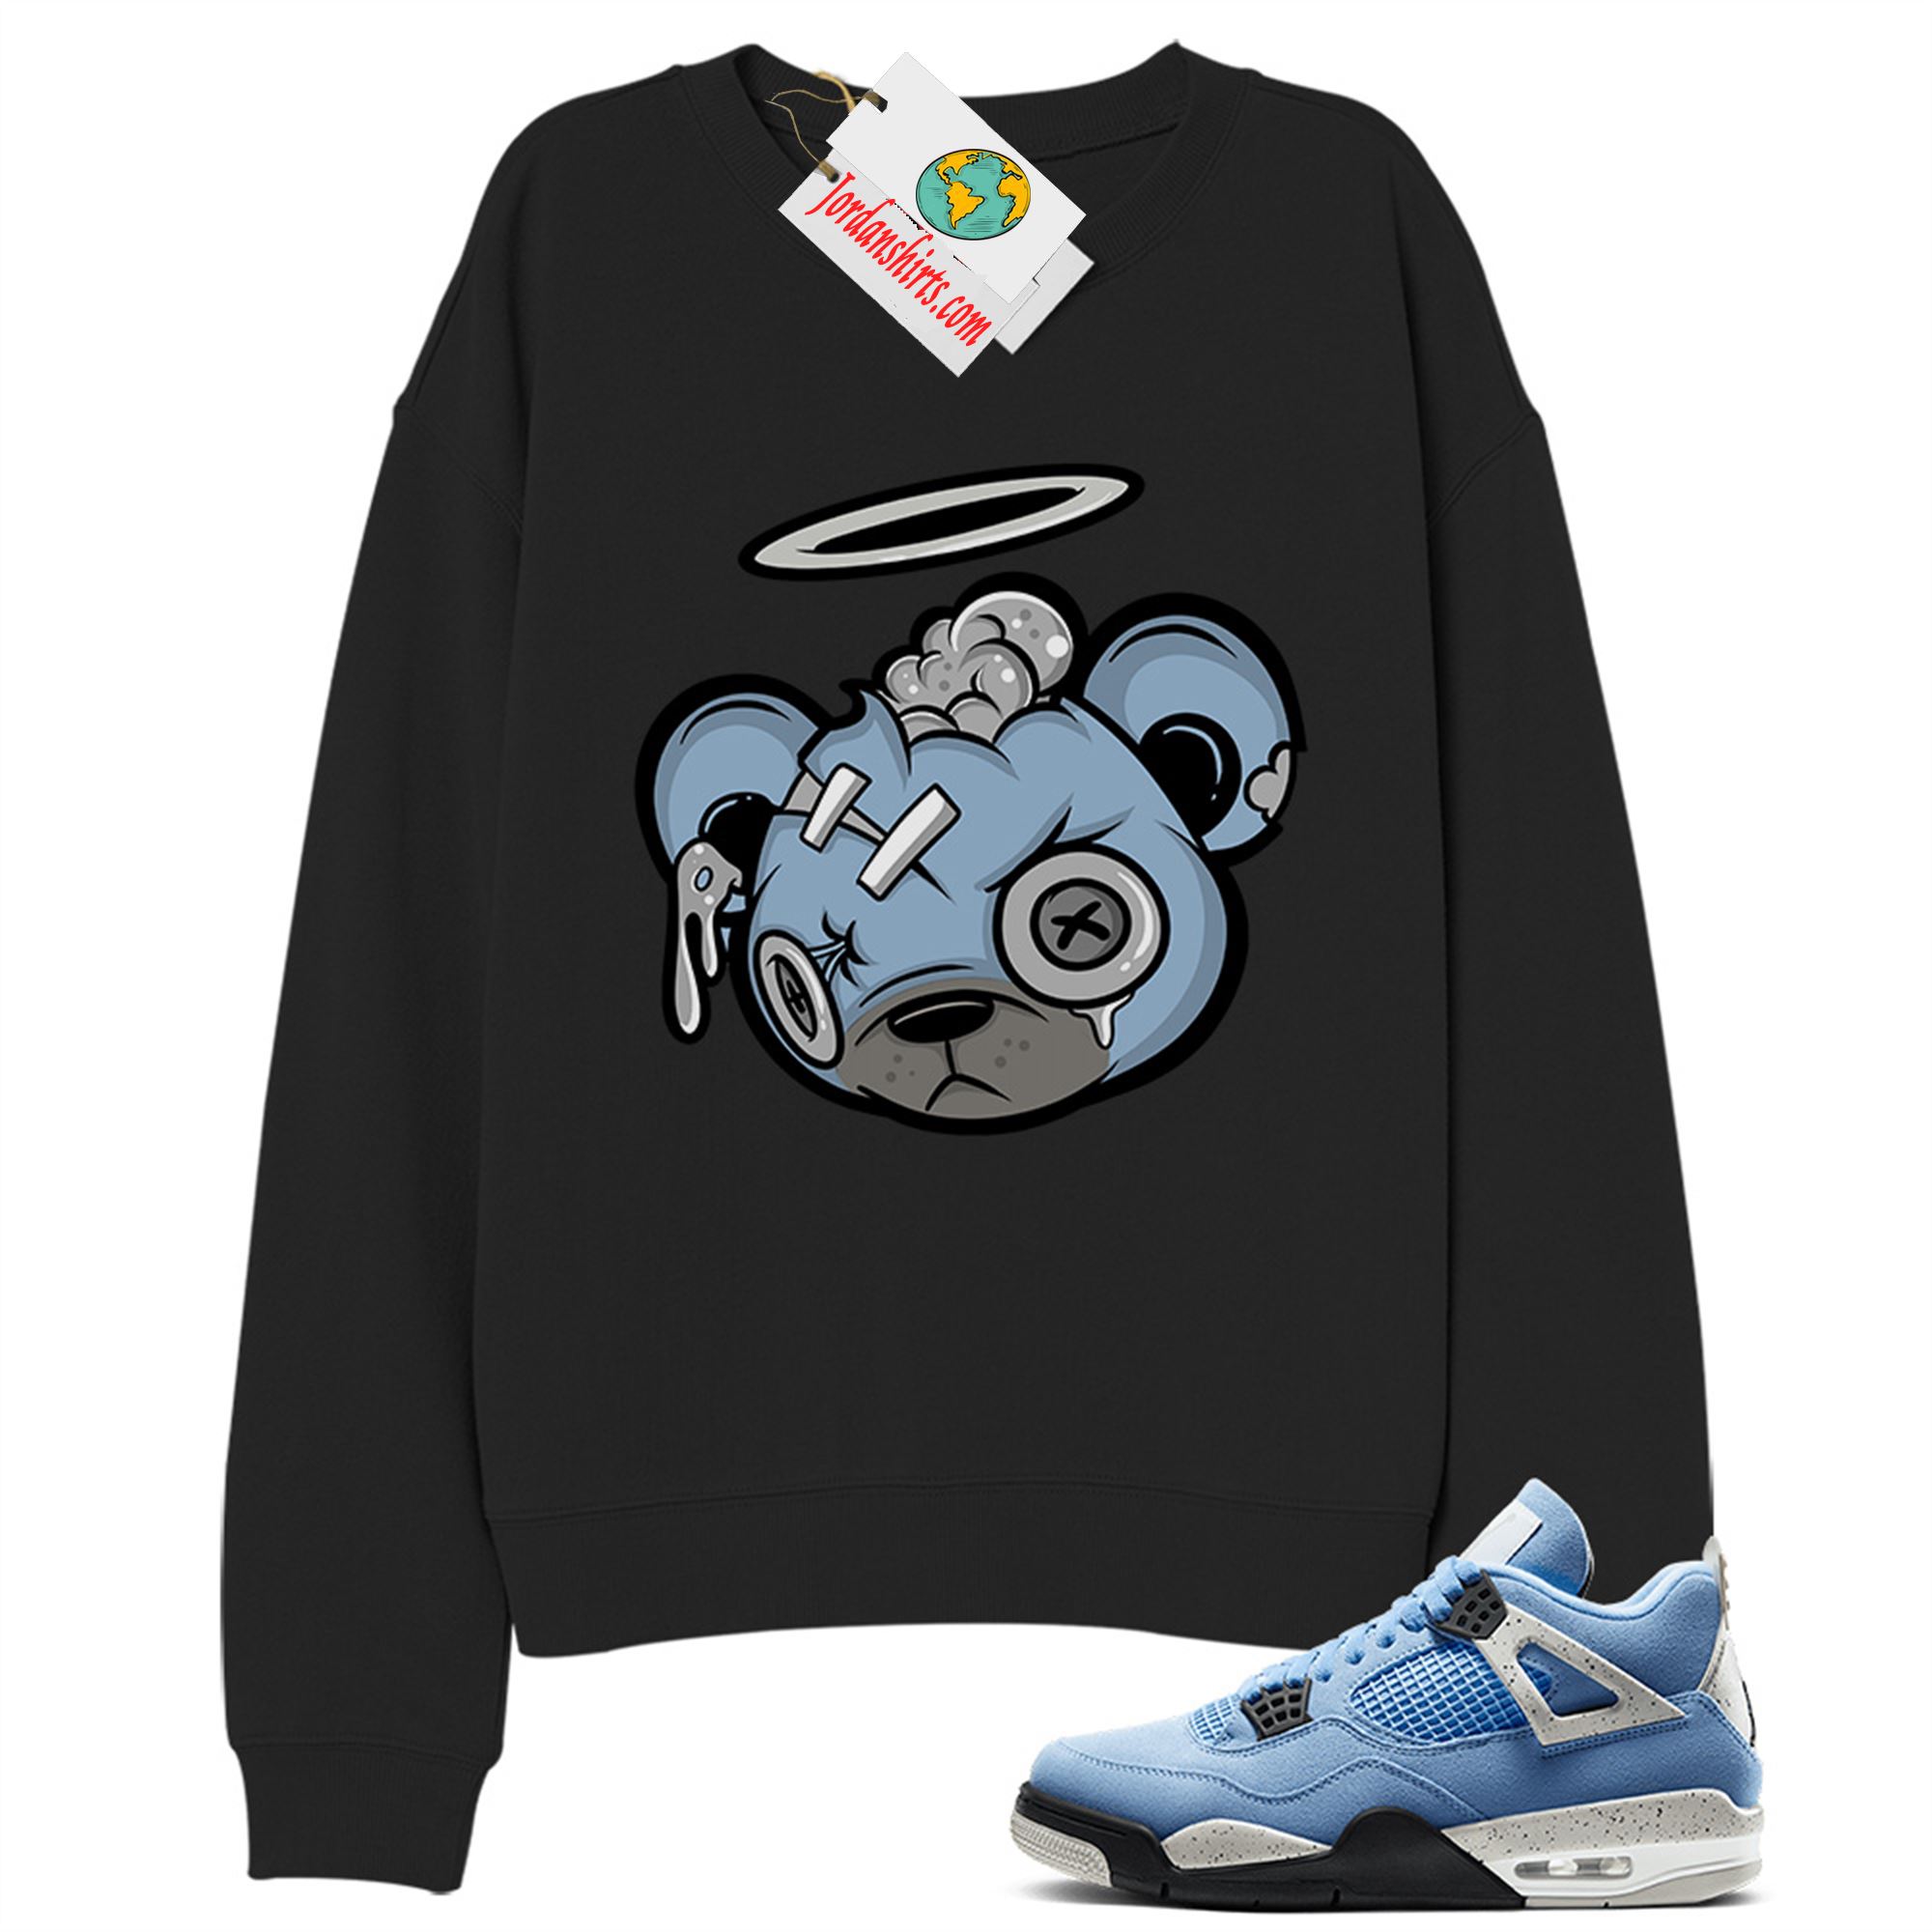 Jordan 4 Sweatshirt, Teddy Bear With Angel Ring Black Sweatshirt Air Jordan 4 University Blue 4s Full Size Up To 5xl